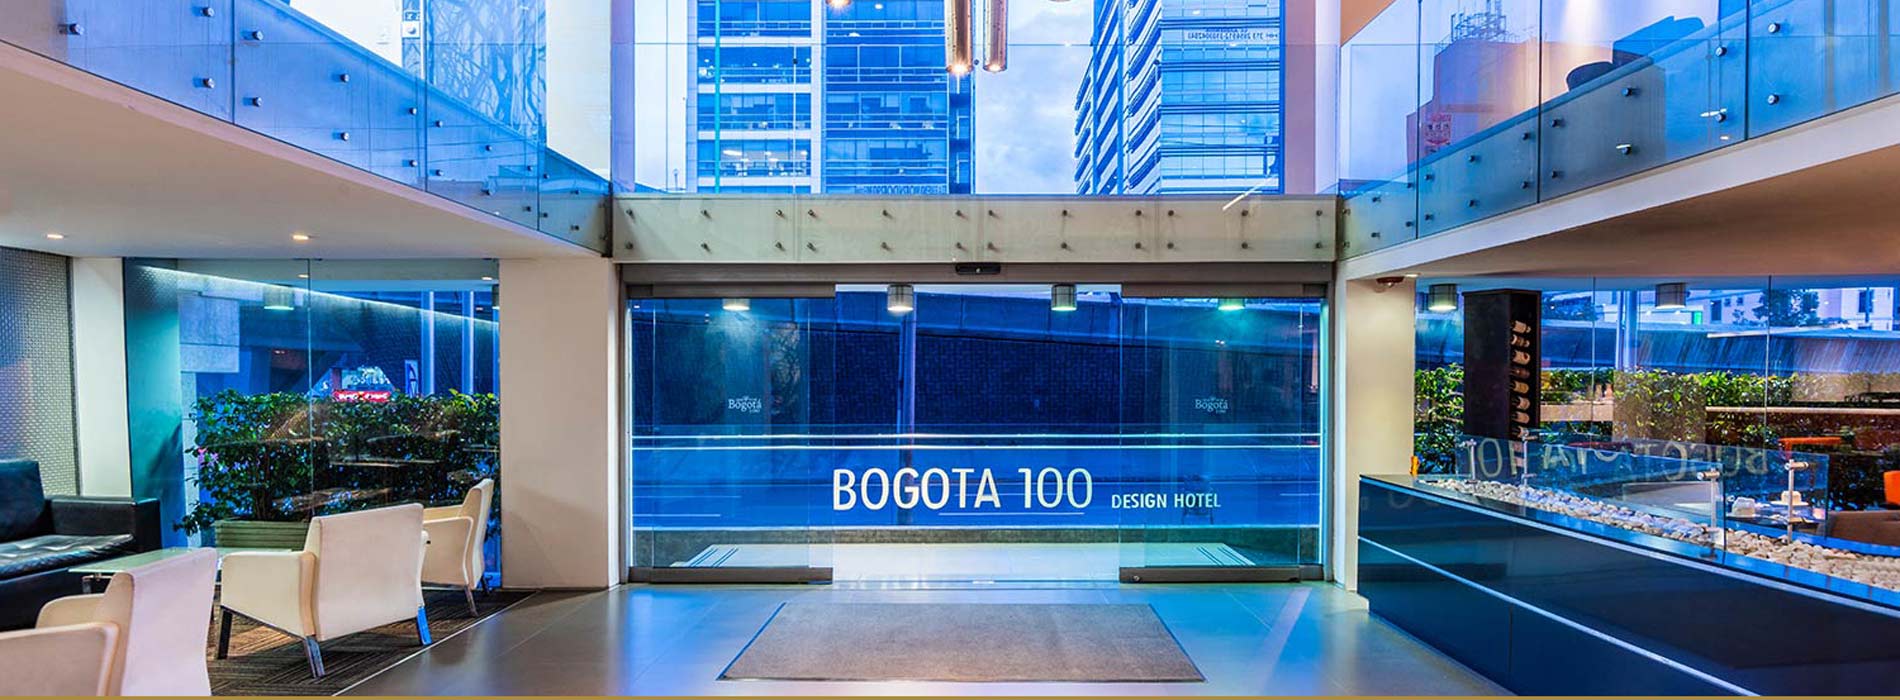 SHG Bogotá 100 Design Hotel  header